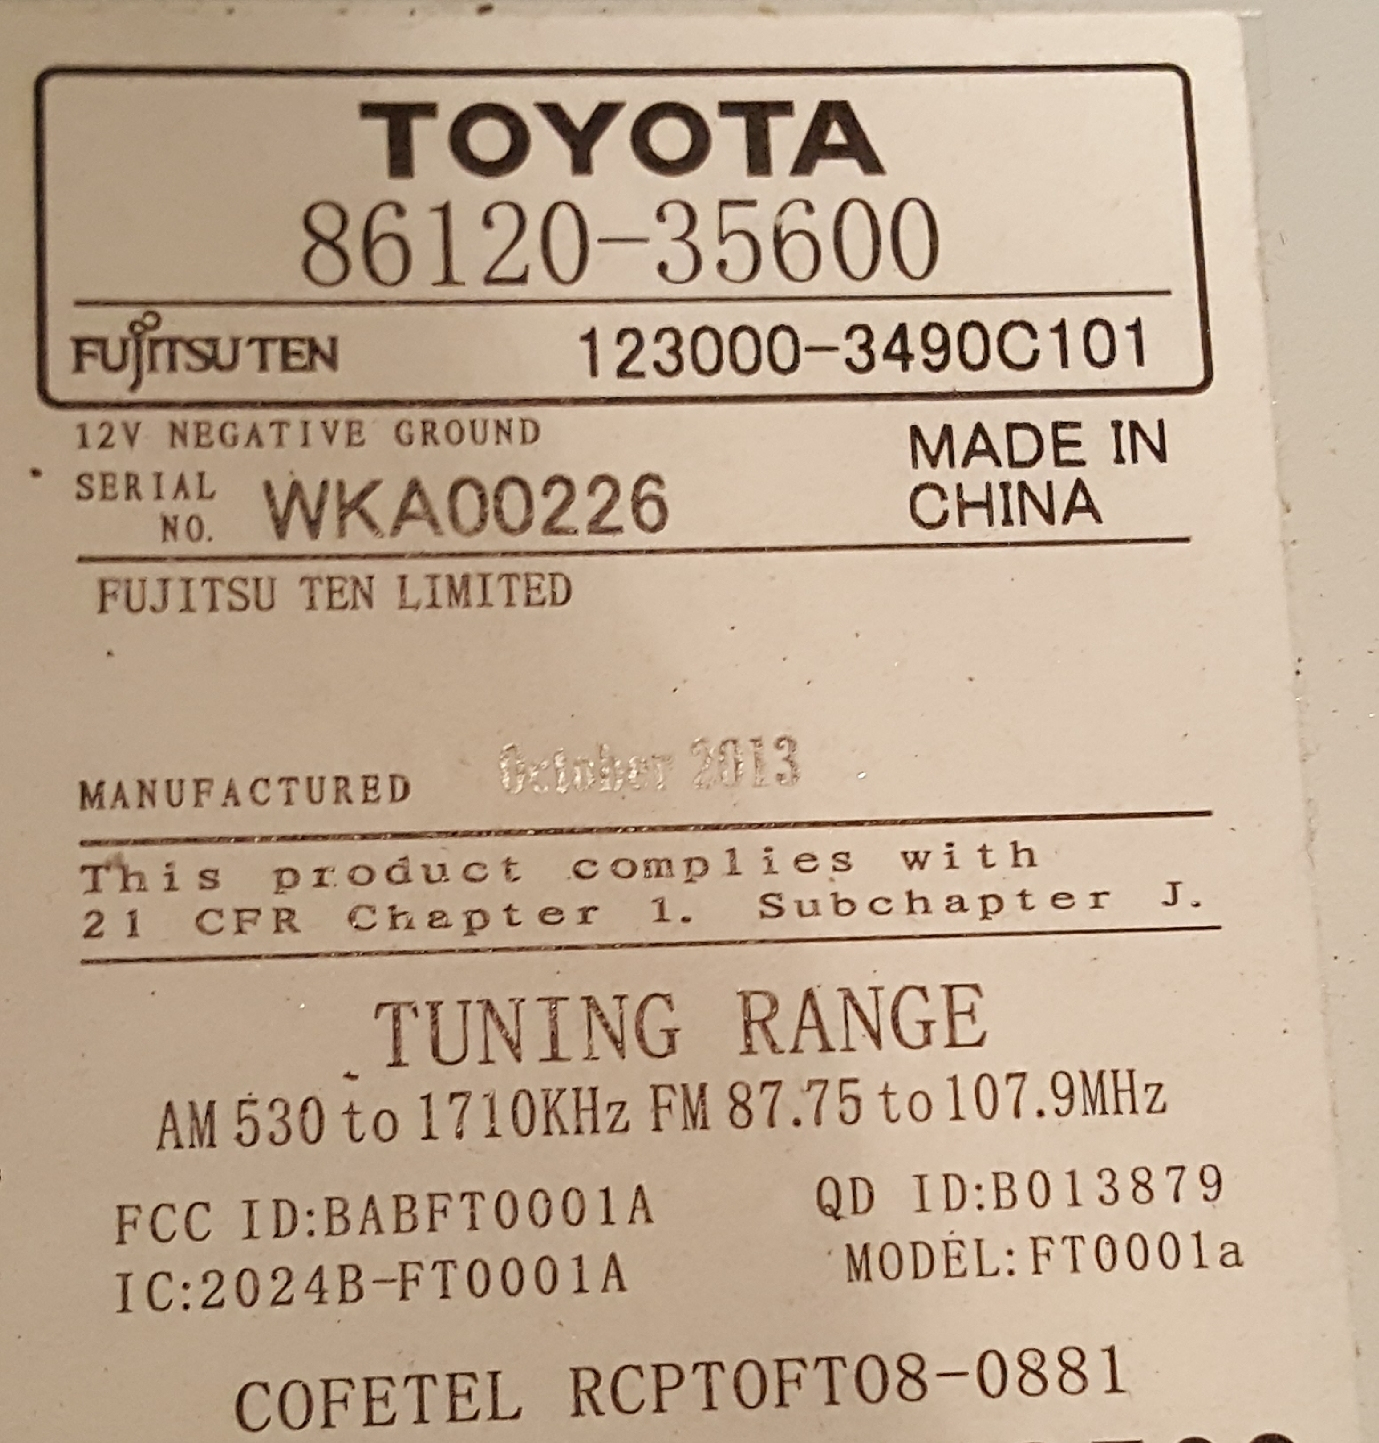 Toyota Fujitsu 86120 14 Wiring Diagram | Wiring Diagram - Toyota 86120 Wiring Diagram